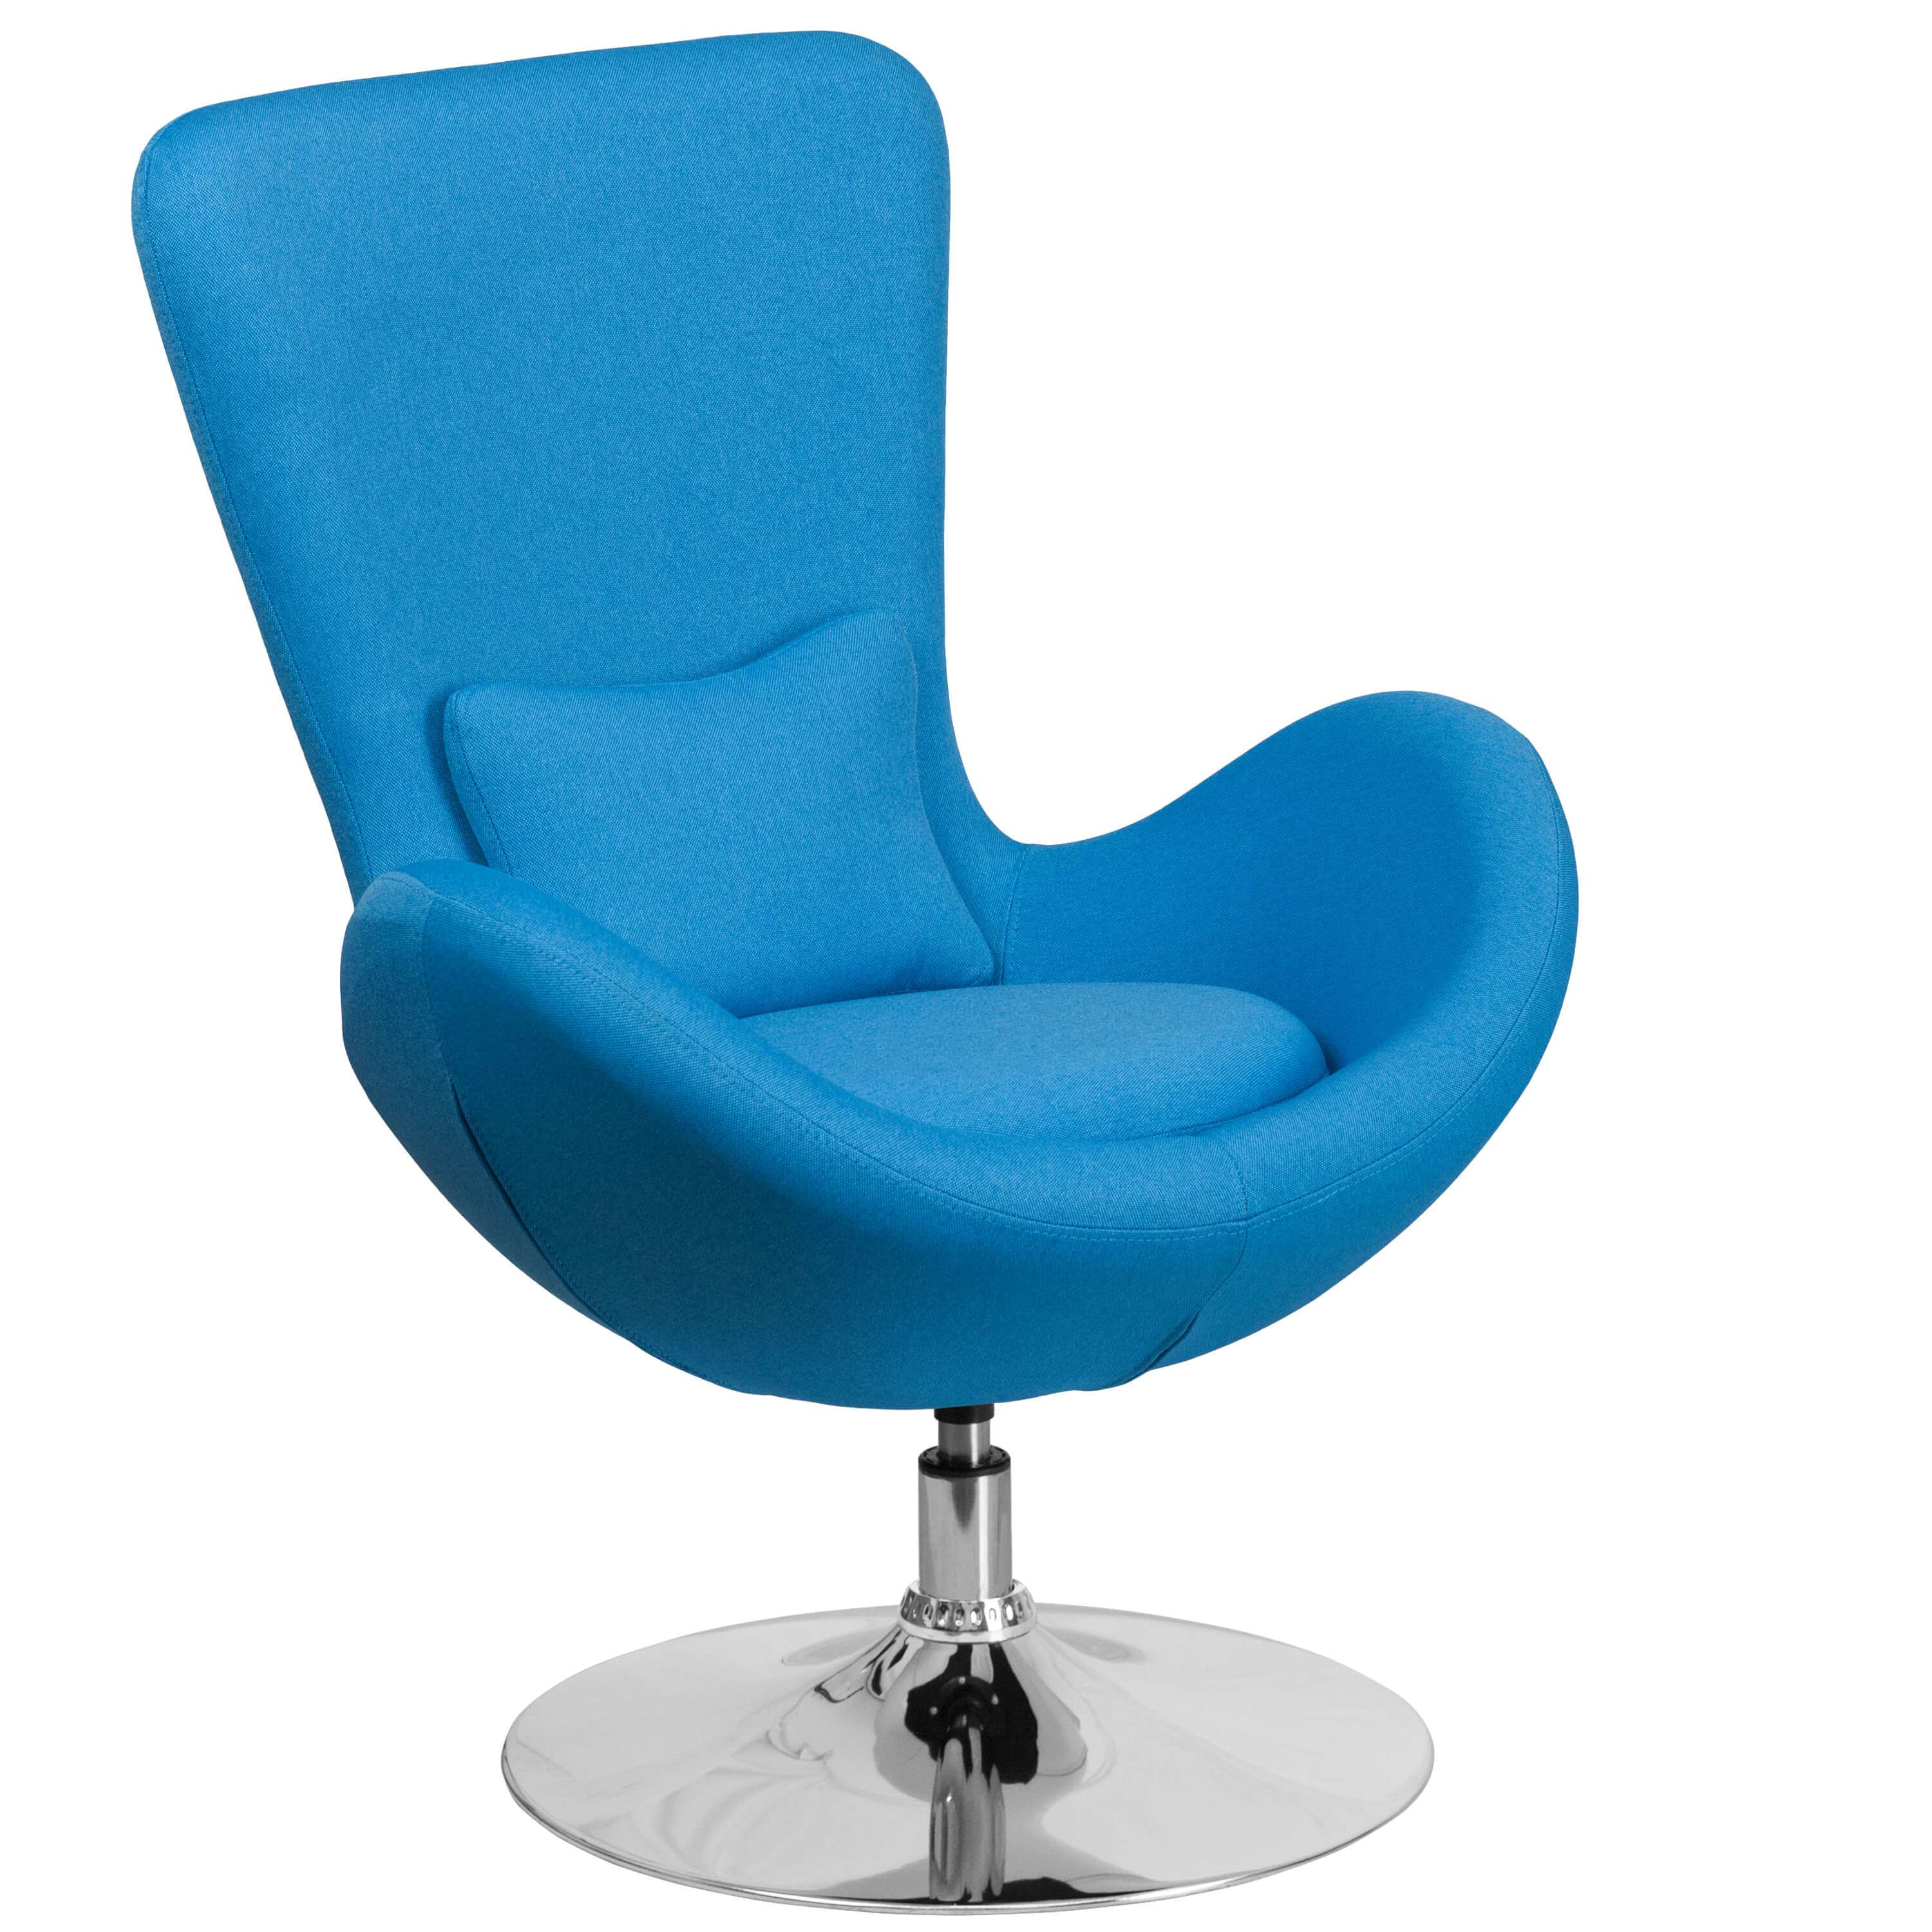 Pols Potten White Hand-Shaped Acrylic Chair 90cm